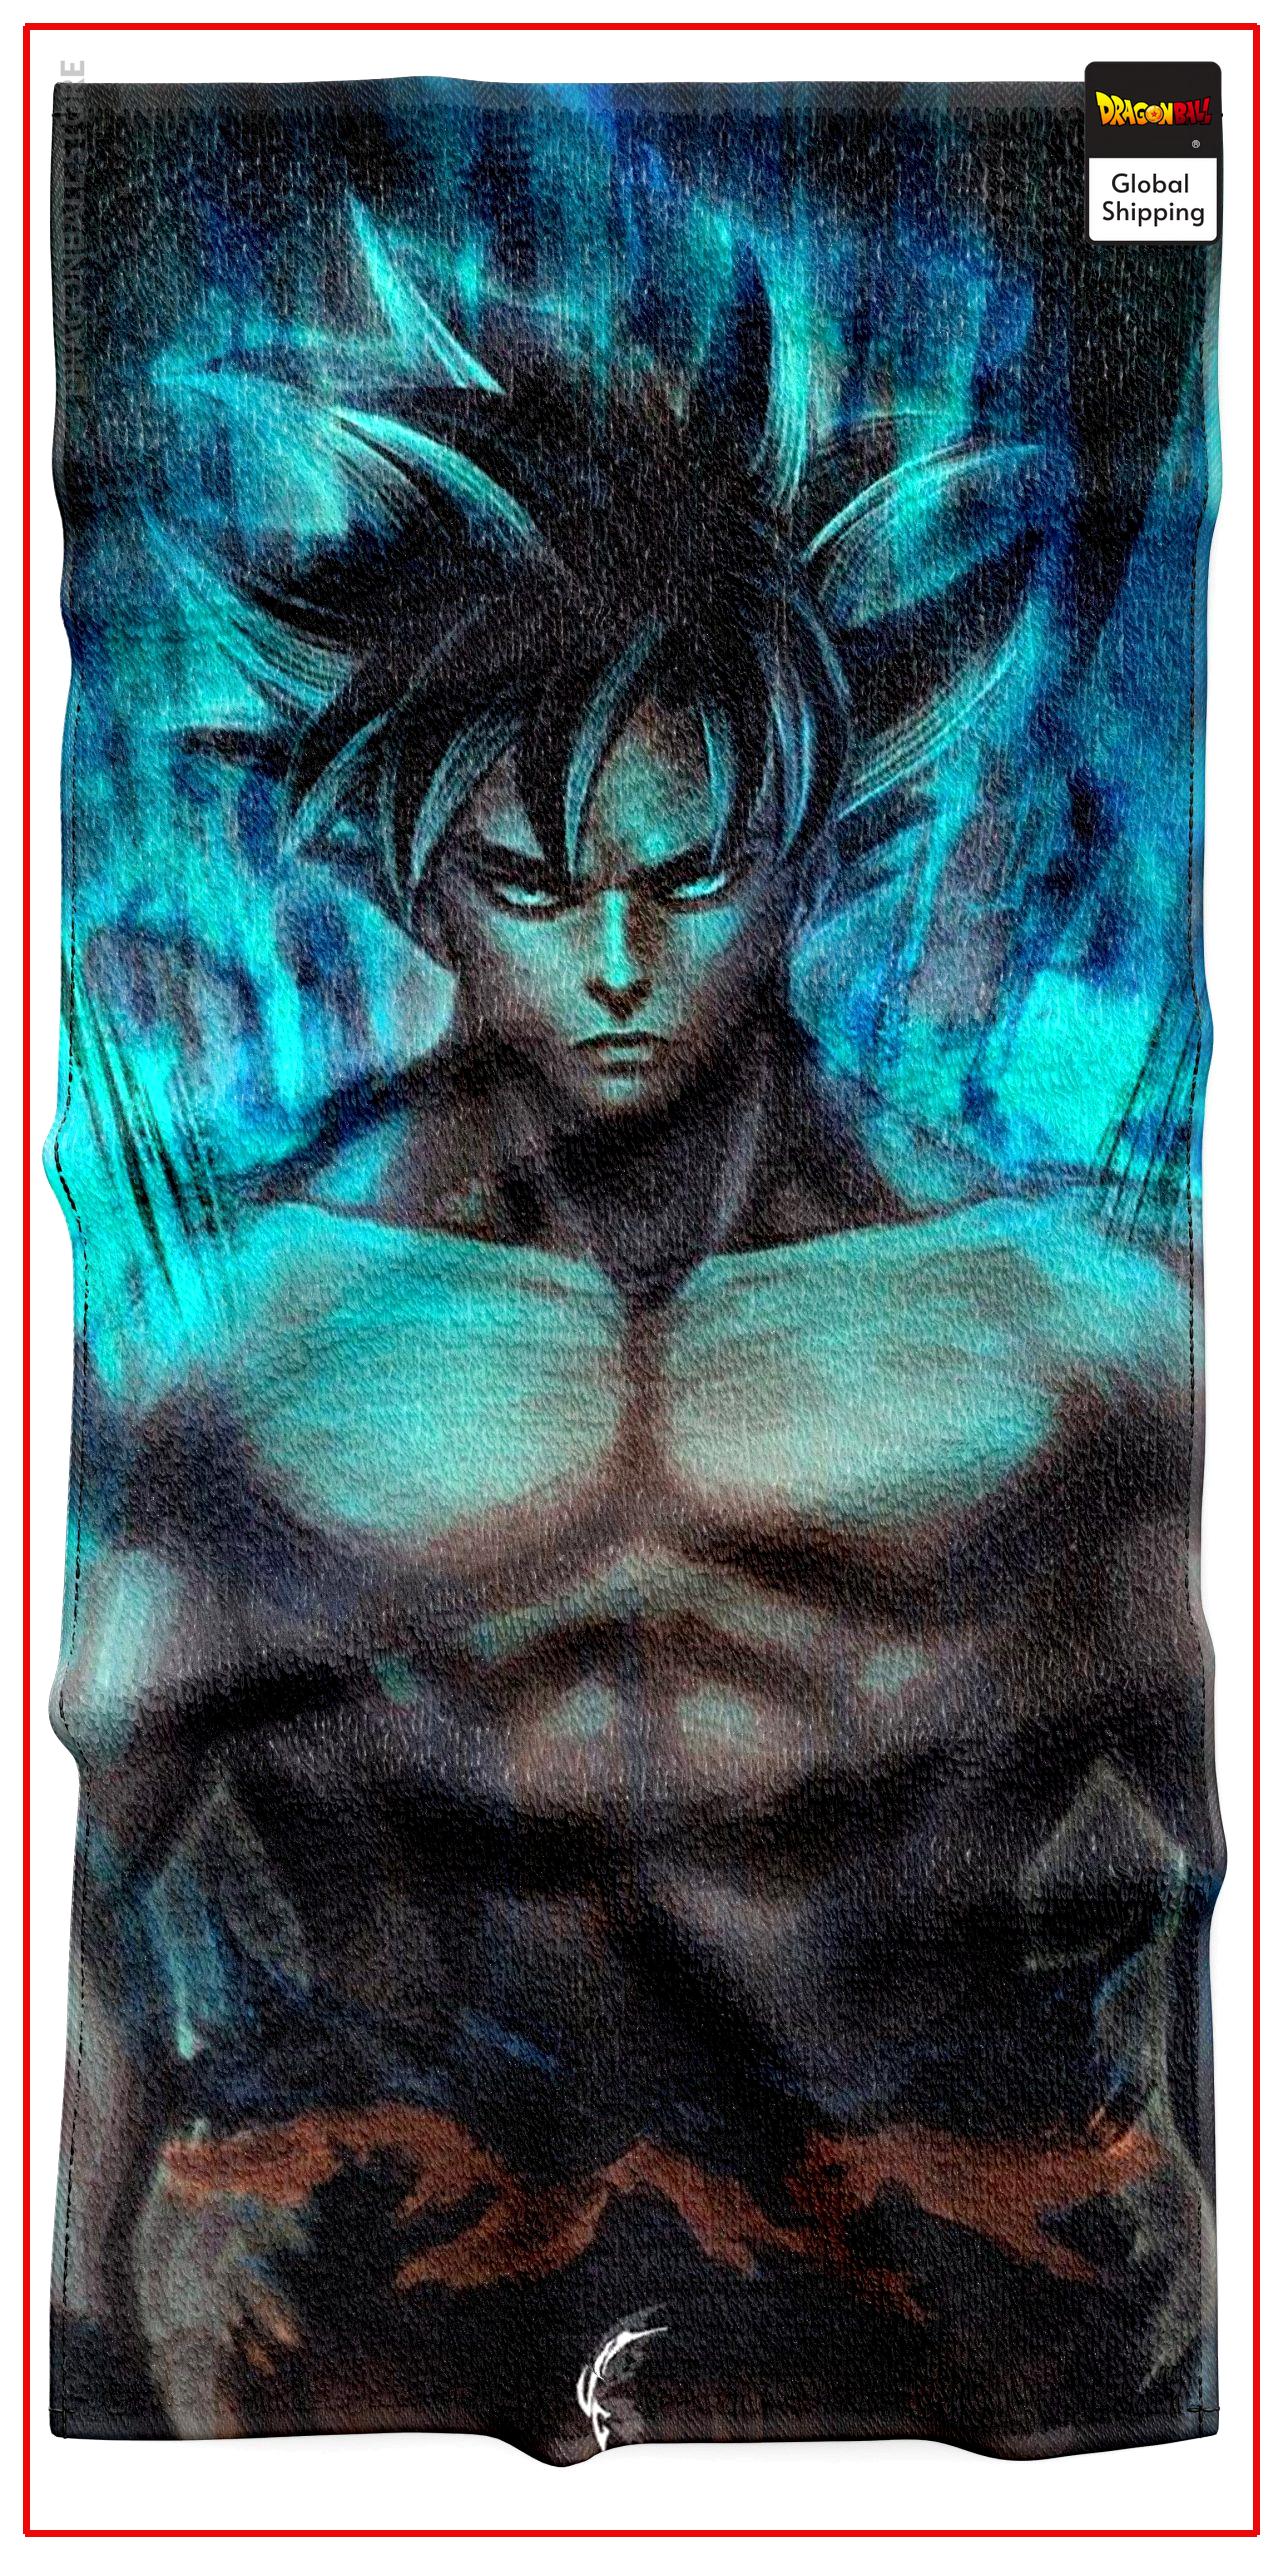 Dragon Ball Z Towel Goku Fan Art HMQ180 / M - 35 x 75 CM Official Dragon Ball Z Merch